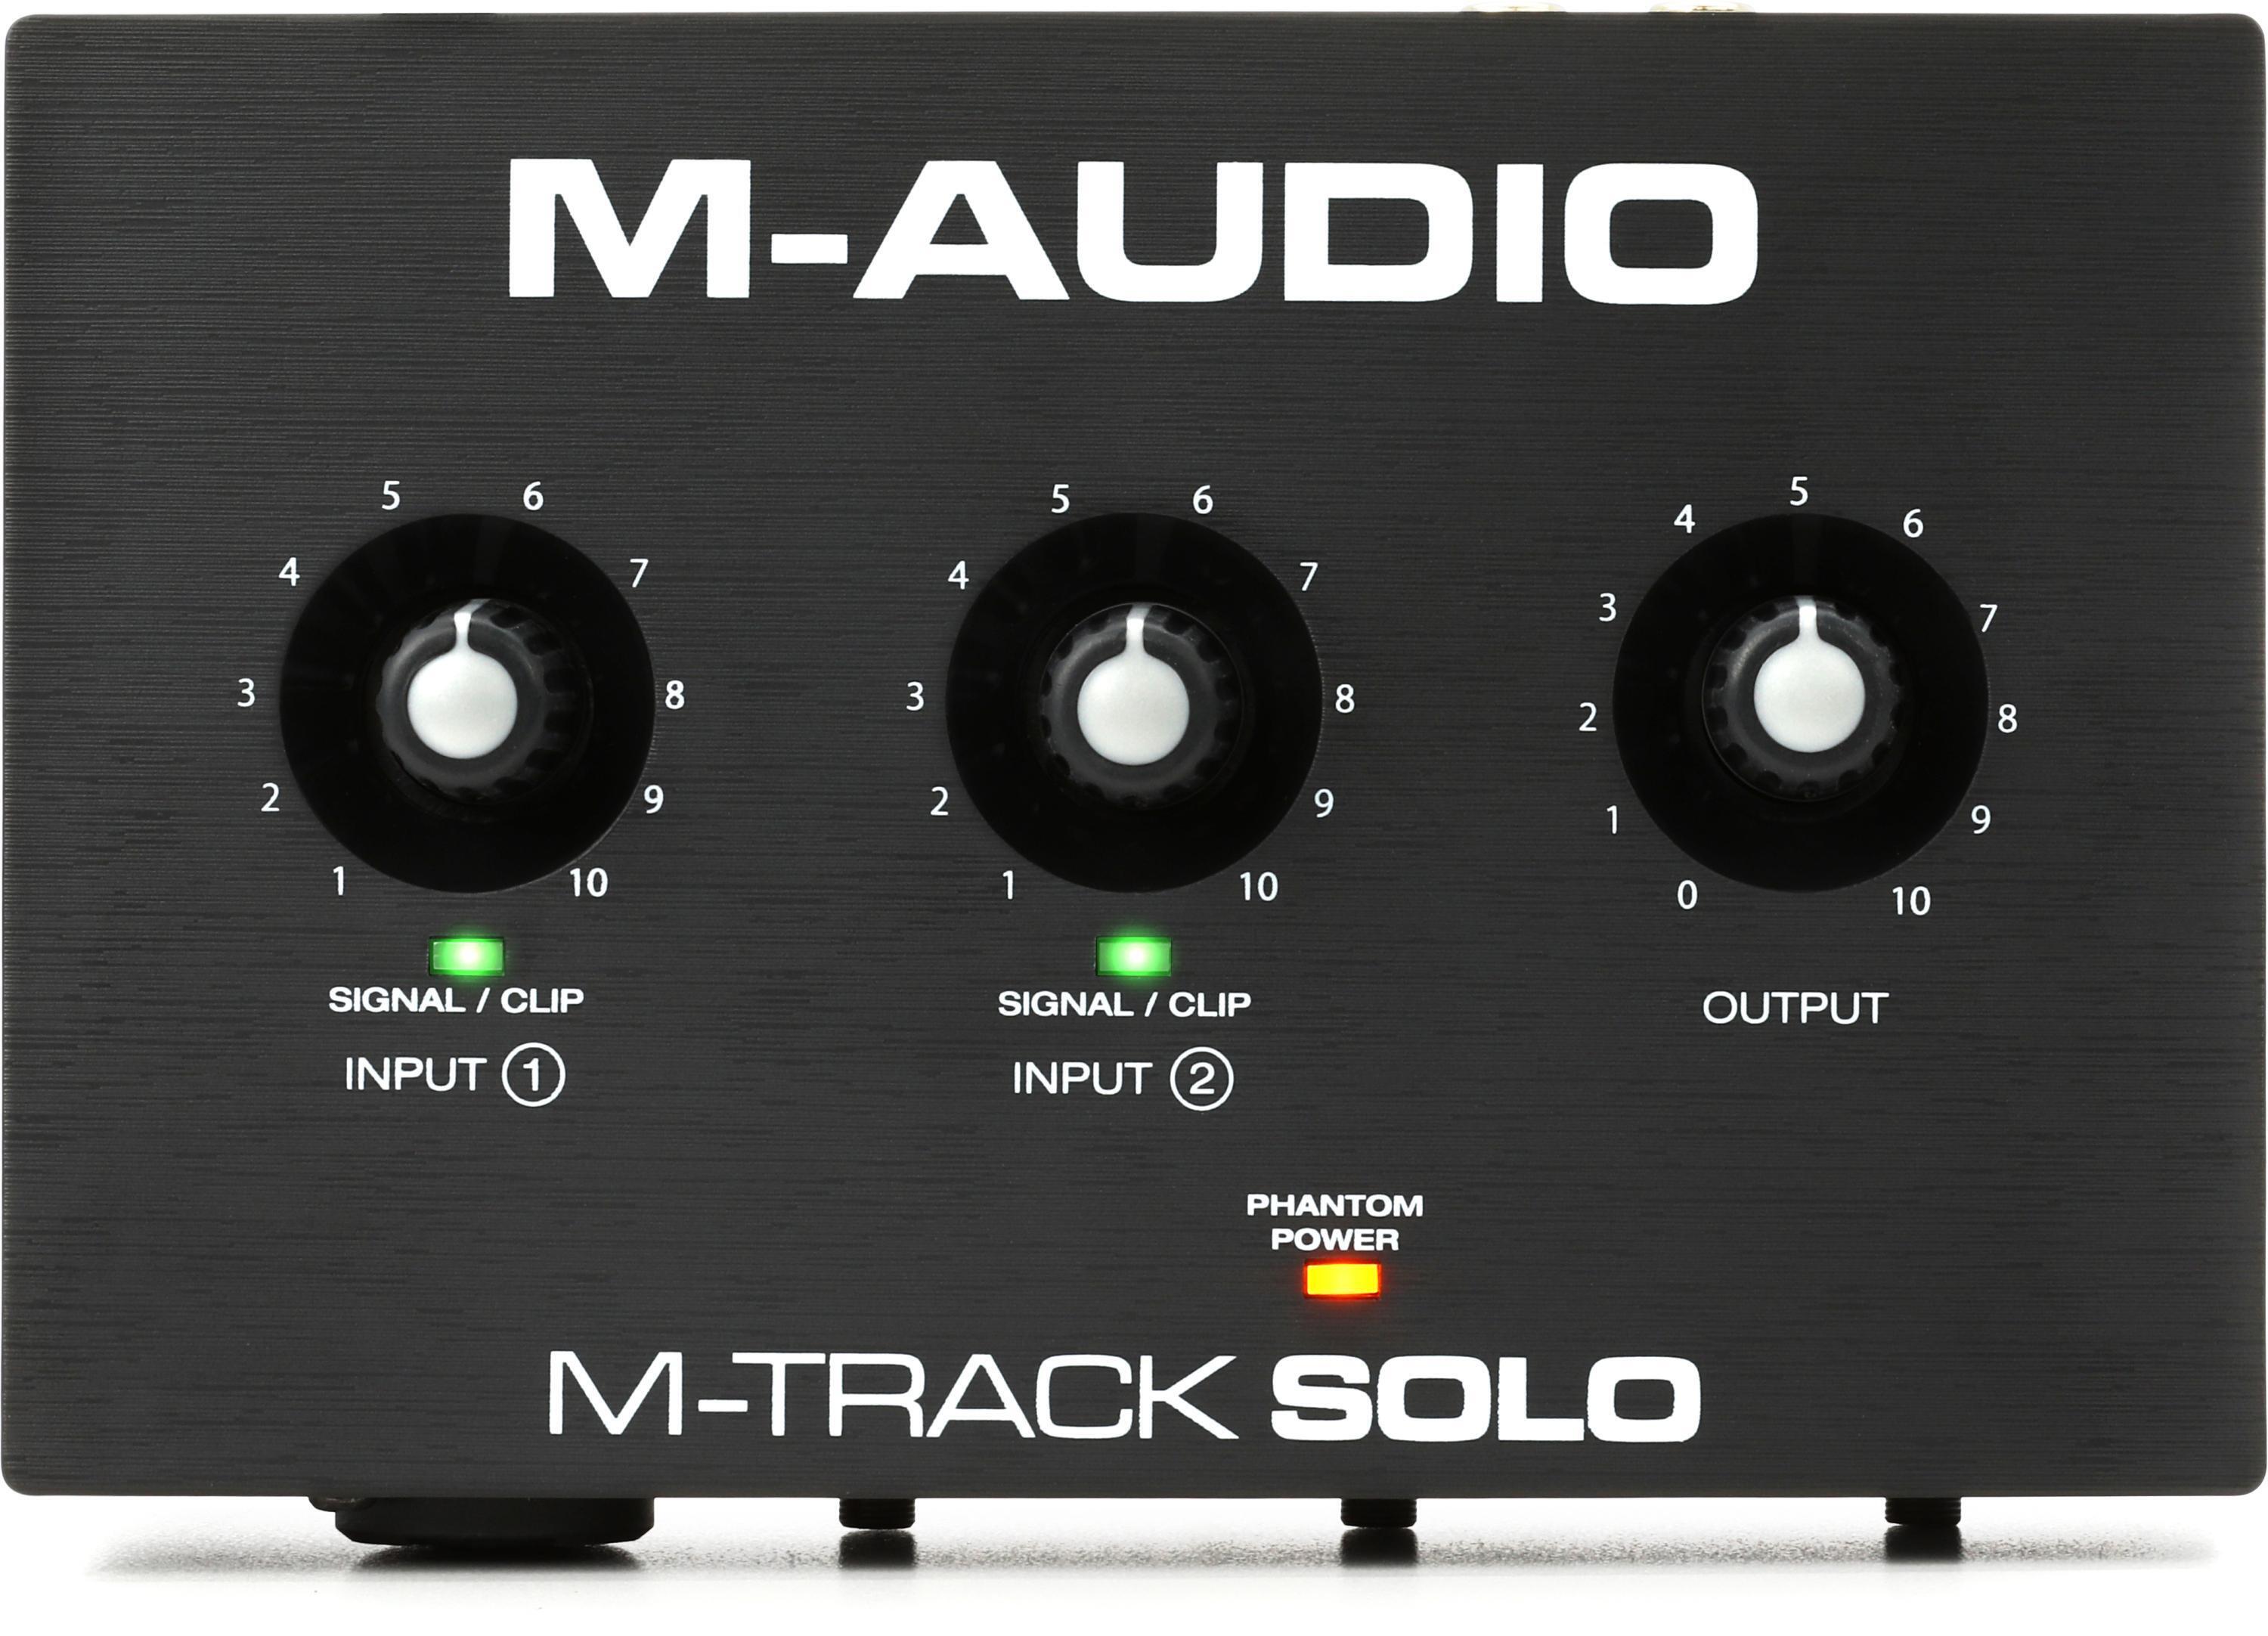 Bundled Item: M-Audio M-Track Solo USB Audio Interface